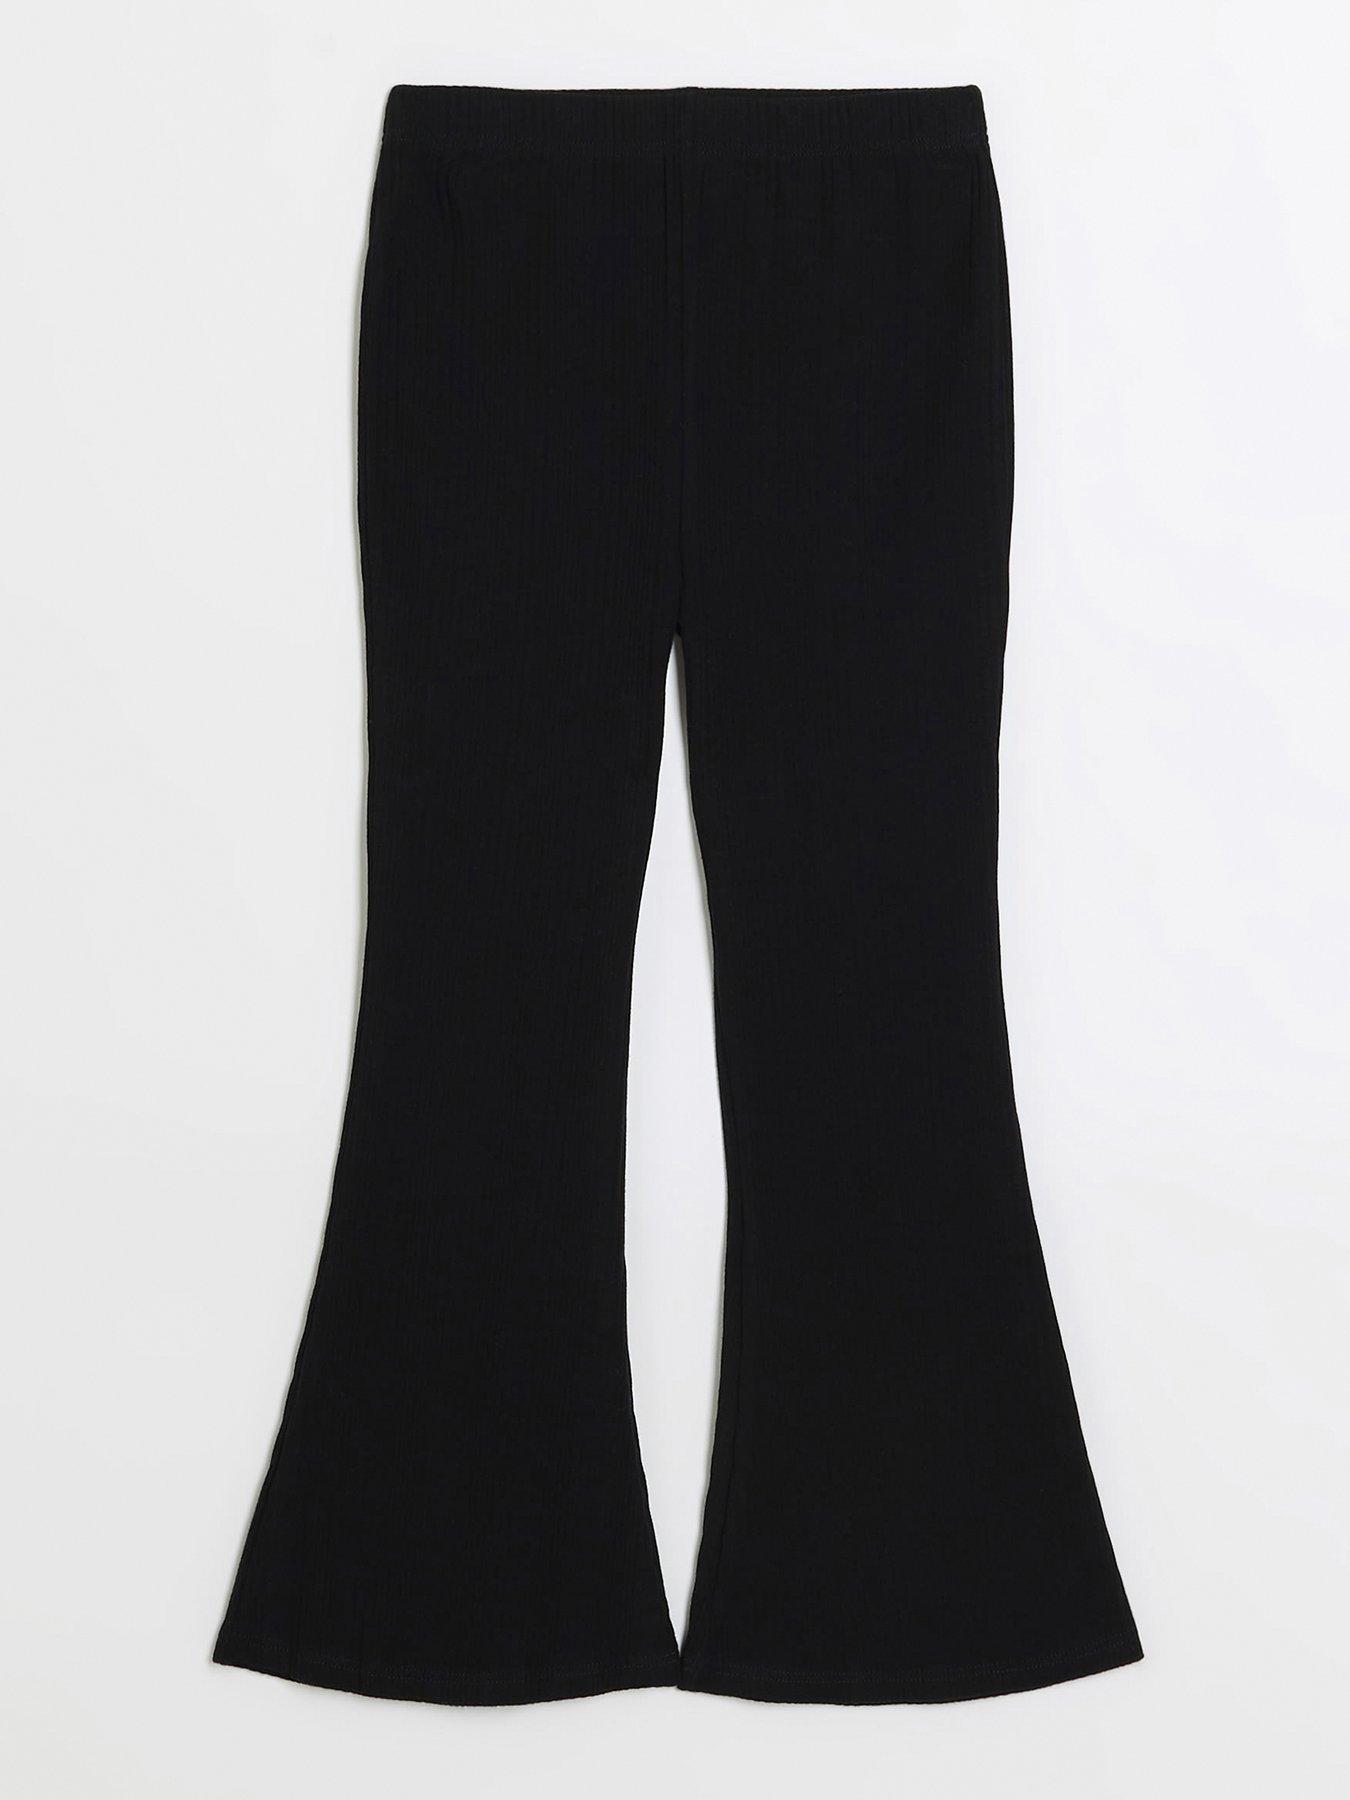 River Island black leggings 9-10y – Sweet Pea Preloved Clothes